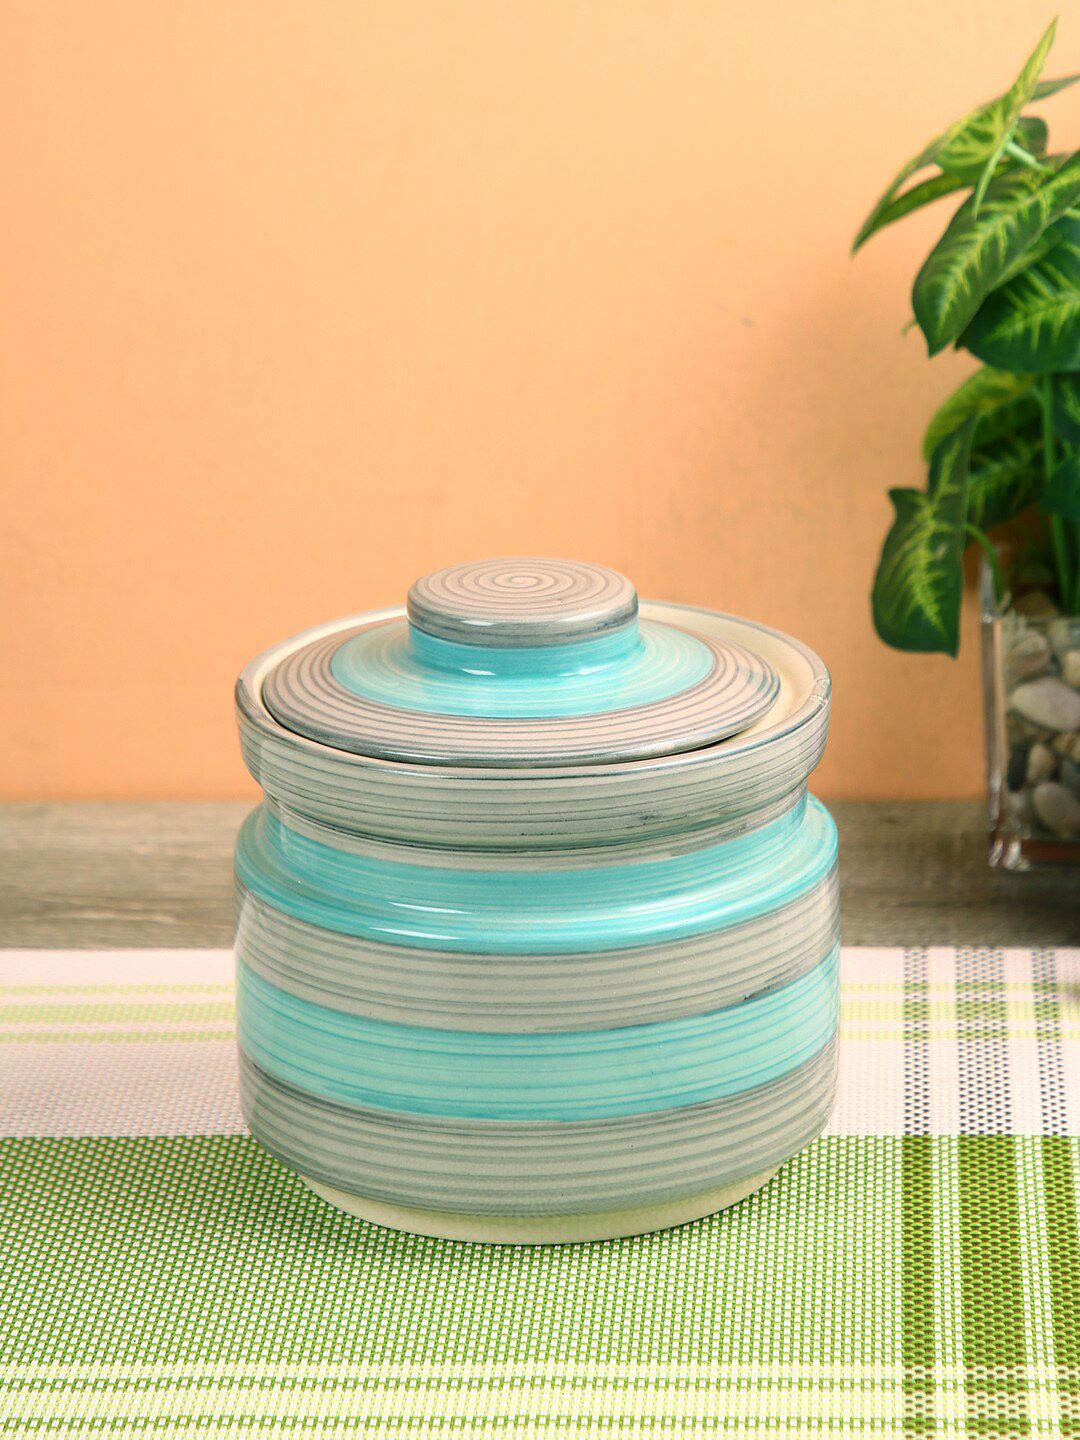 Aapno Rajasthan Grey & Sea Green Handcrafted Ceramic Storage Jar Price in India